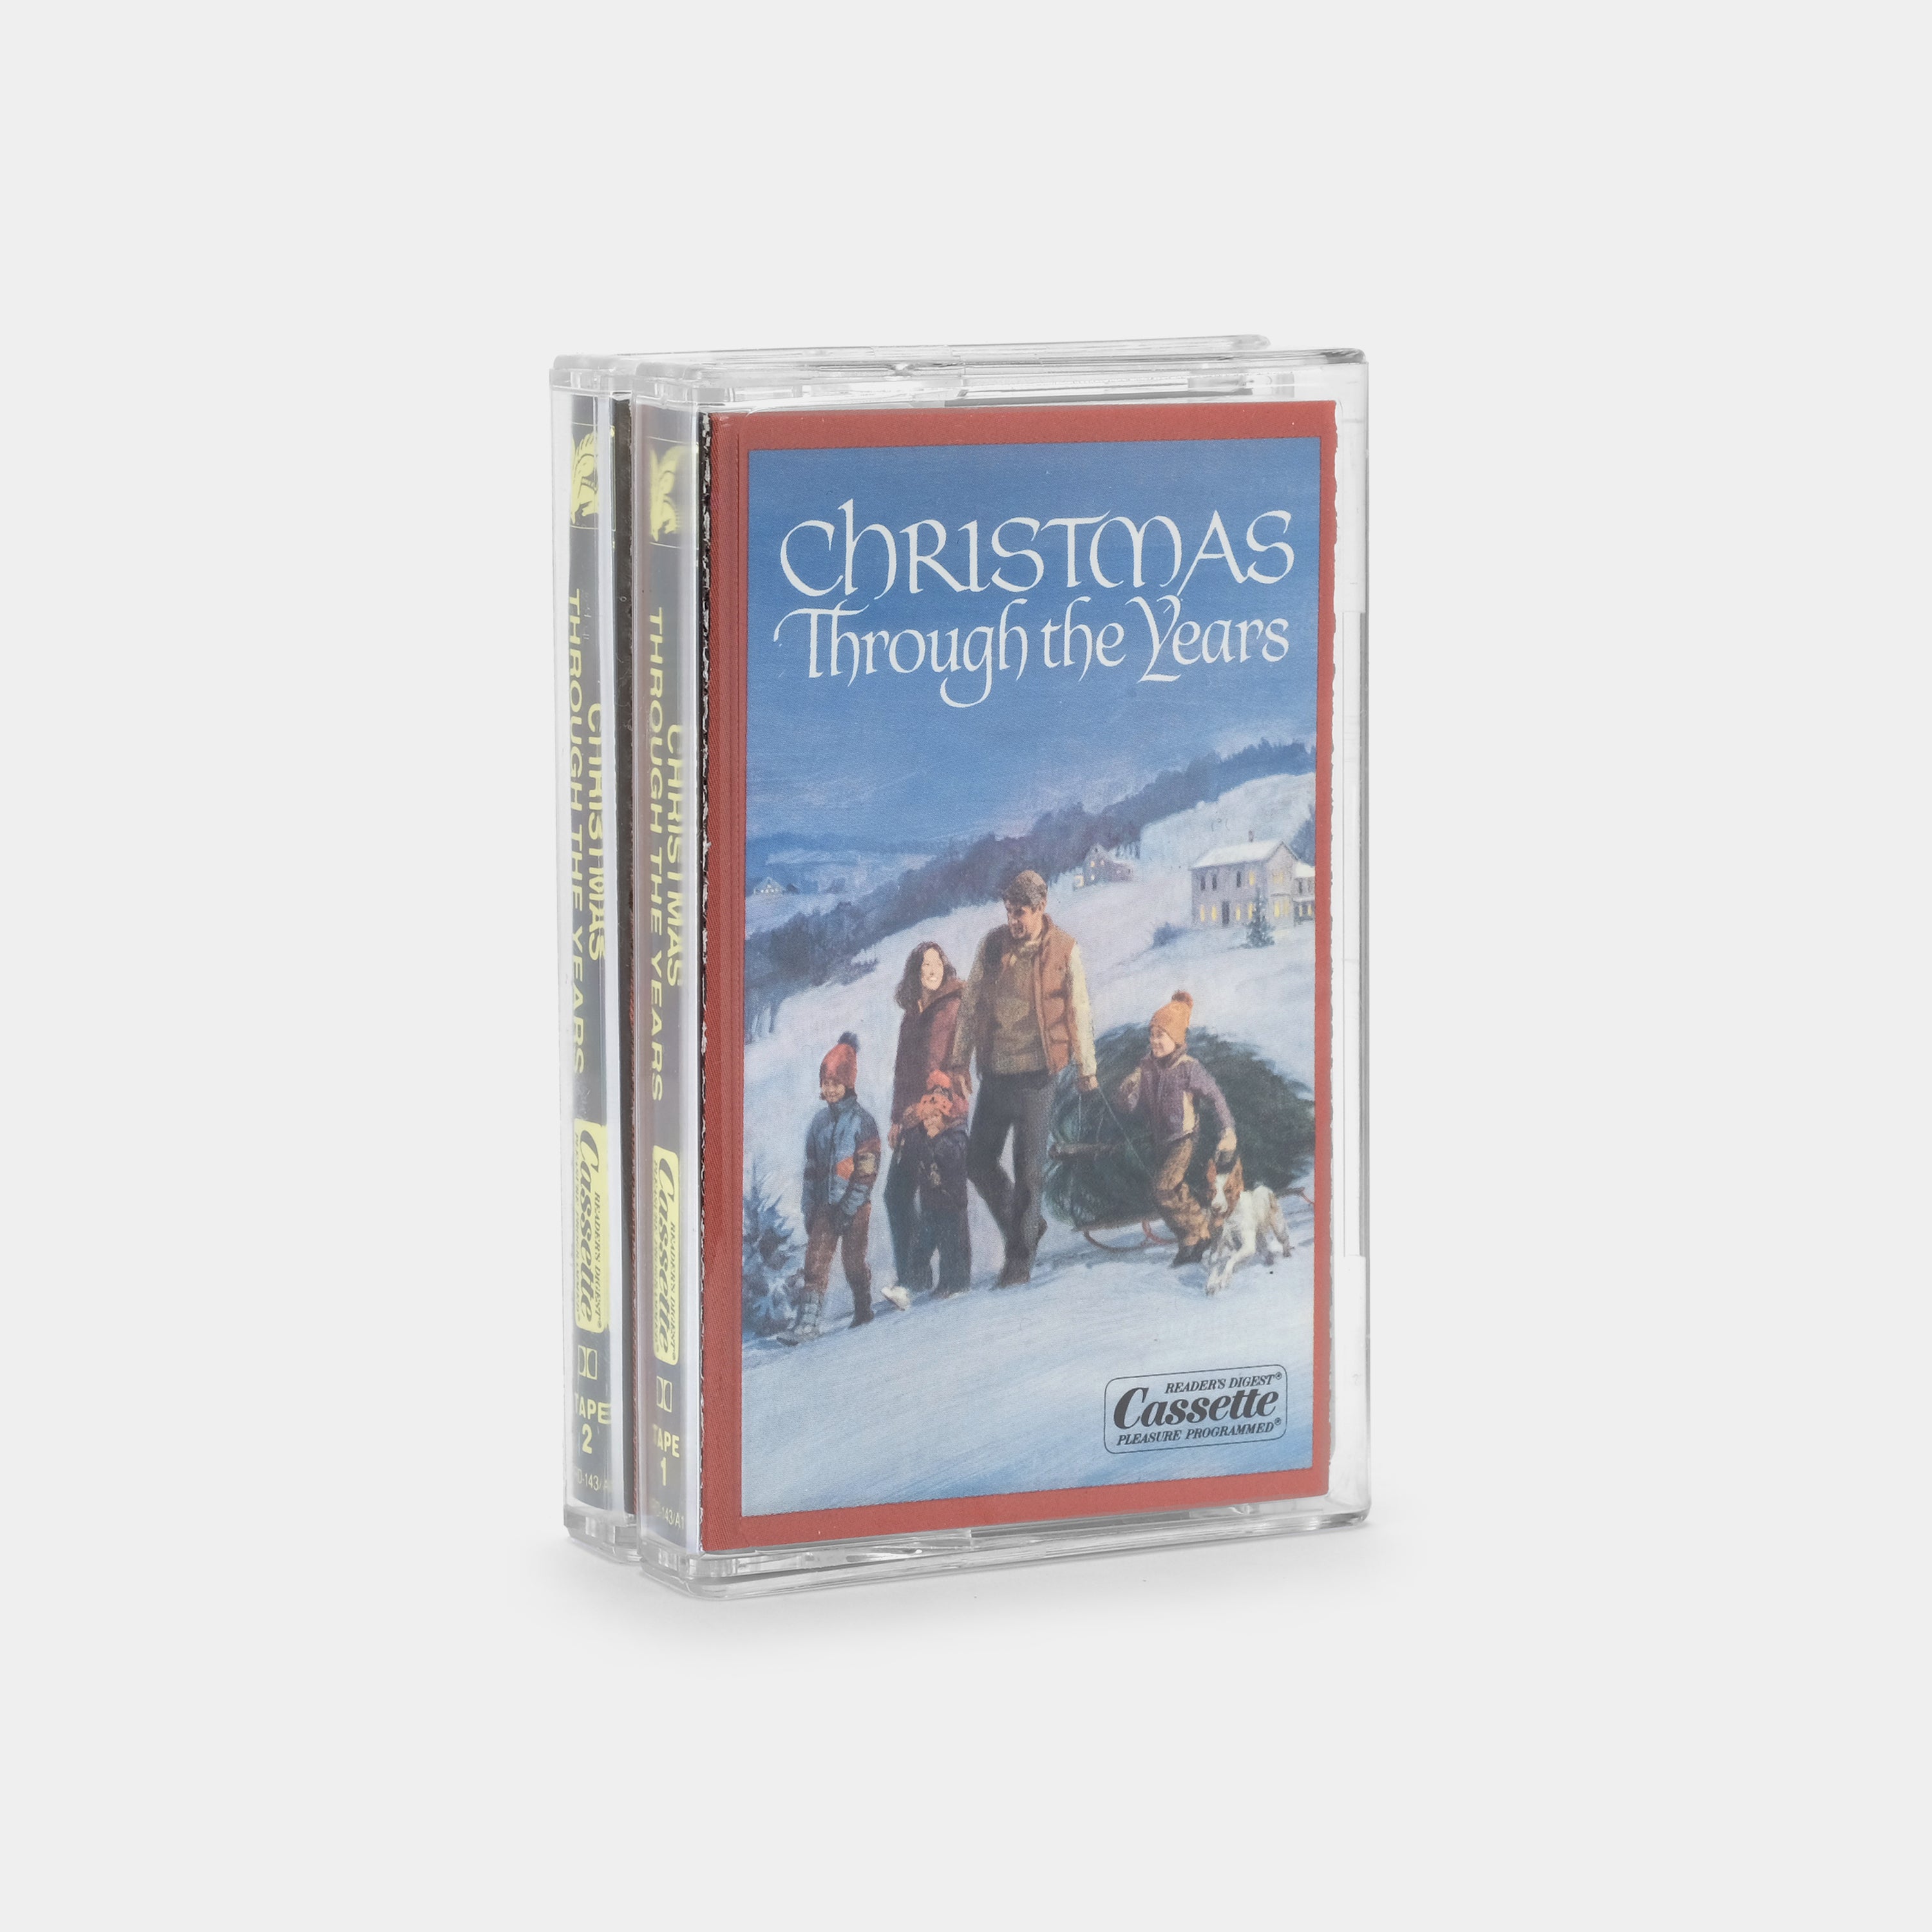 Readers Digest Cassette Pleasure Programmed: Christmas Through the Years 1 & 2 Cassette Tape Set